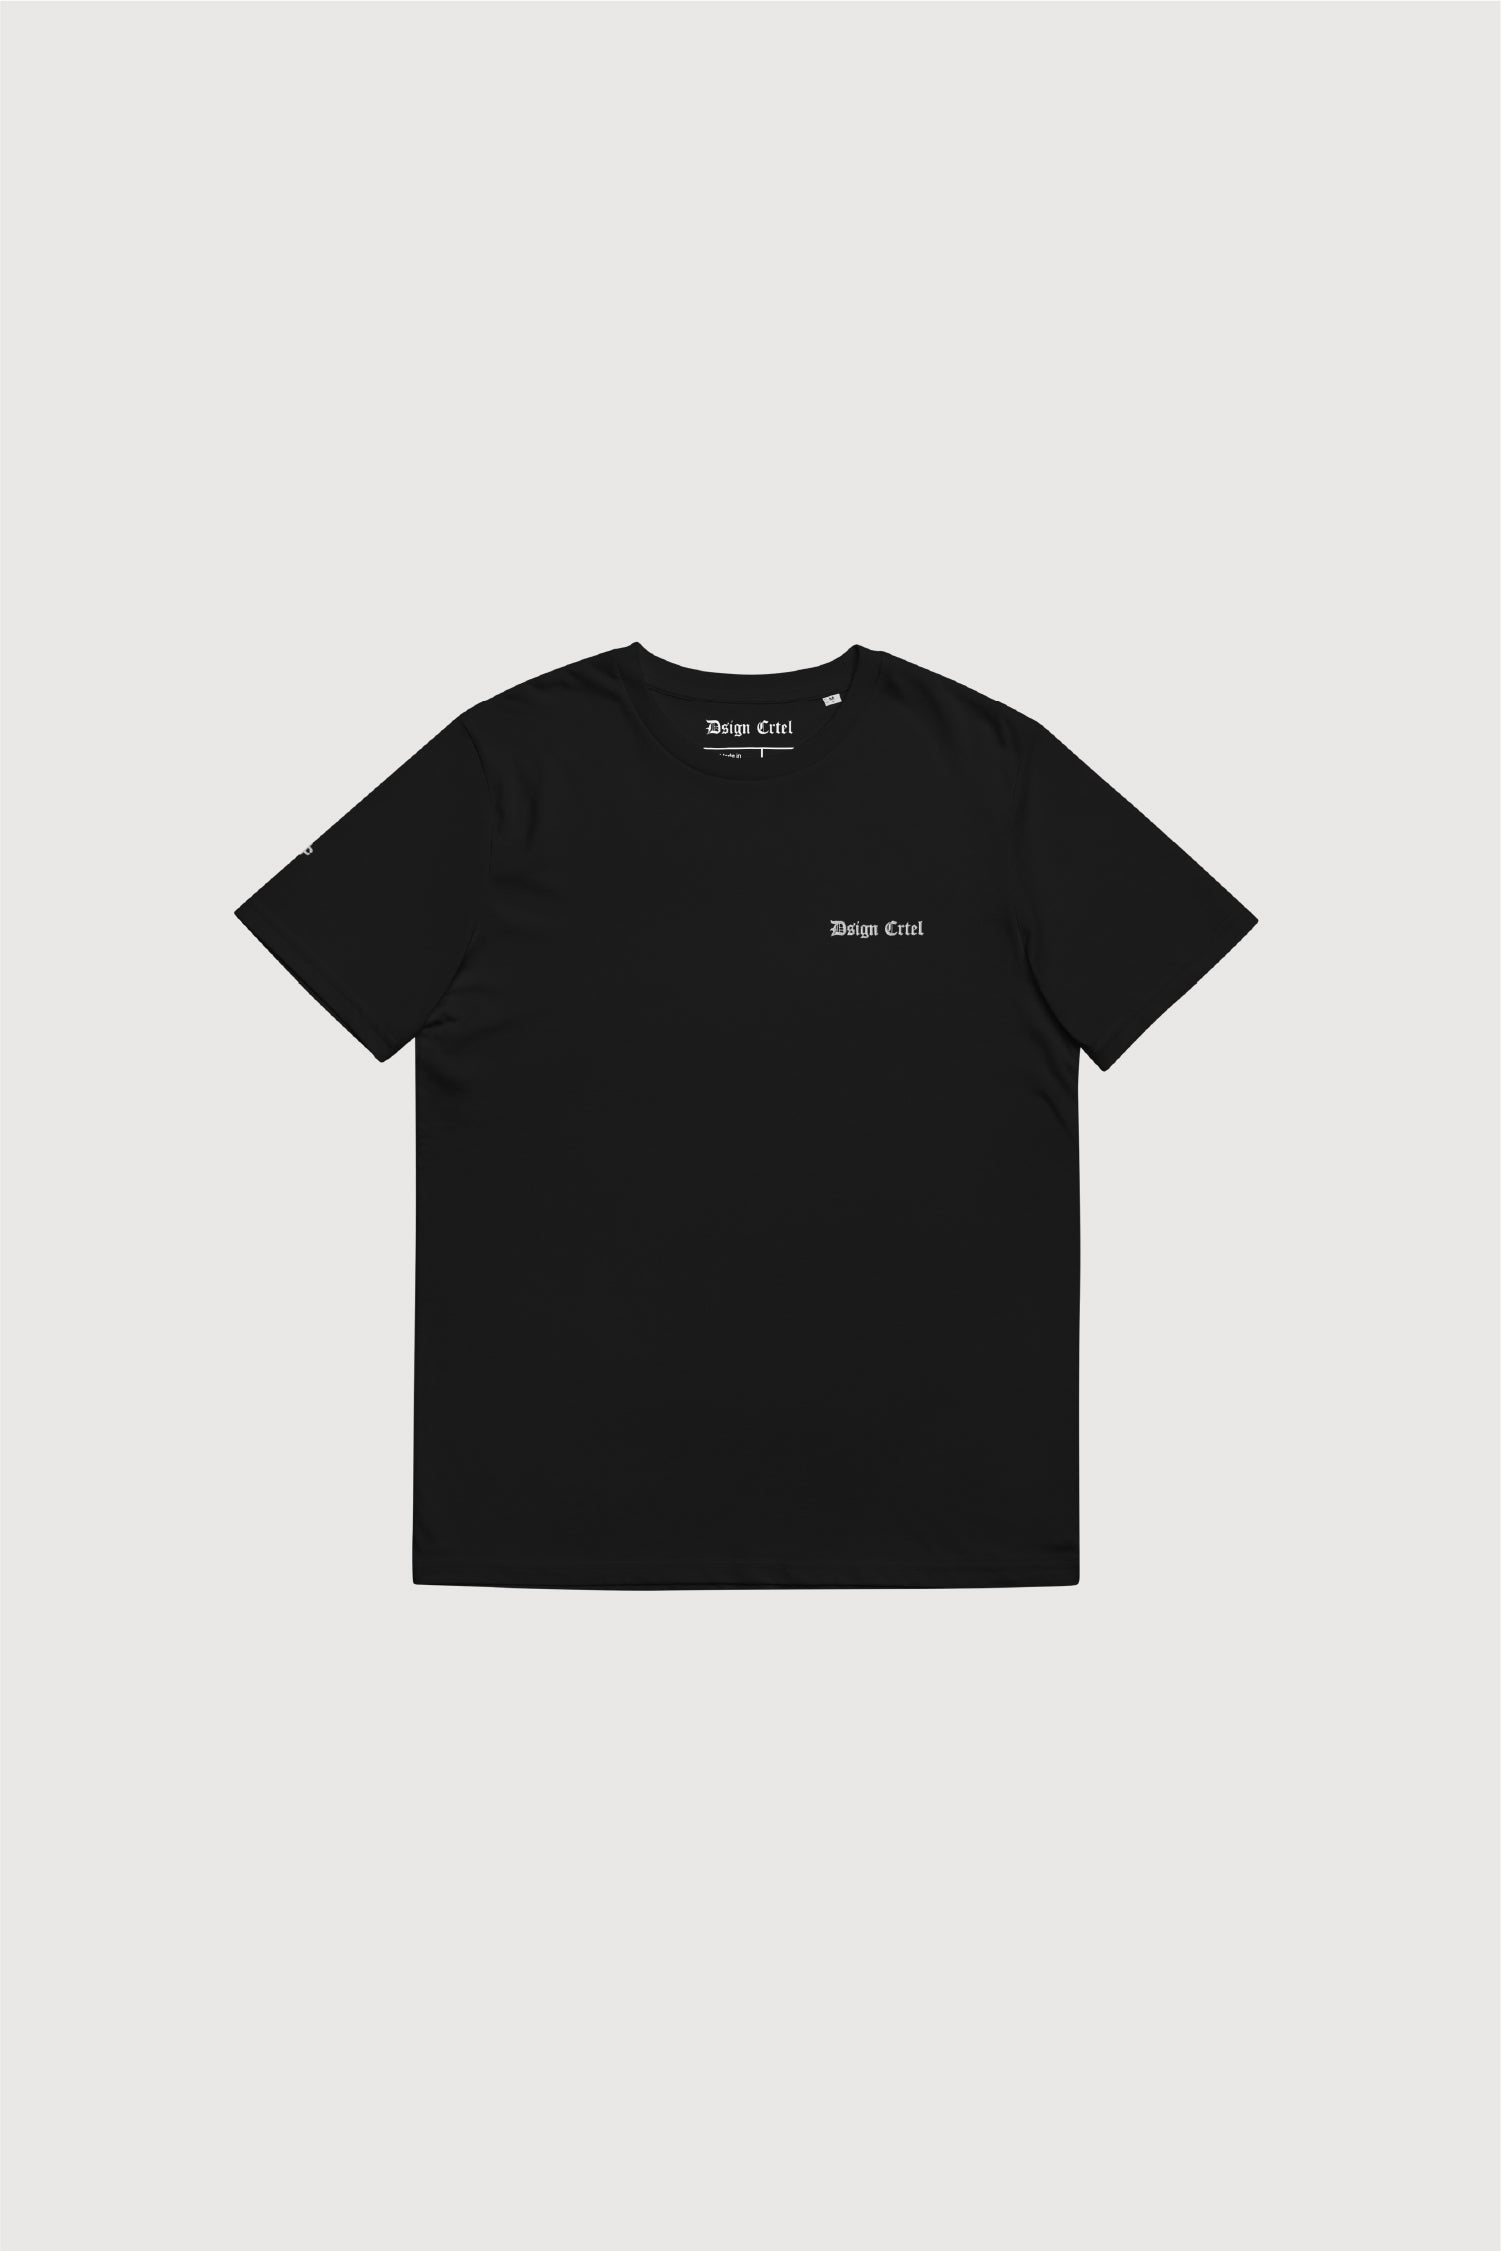 Silent Descent Black T-shirt